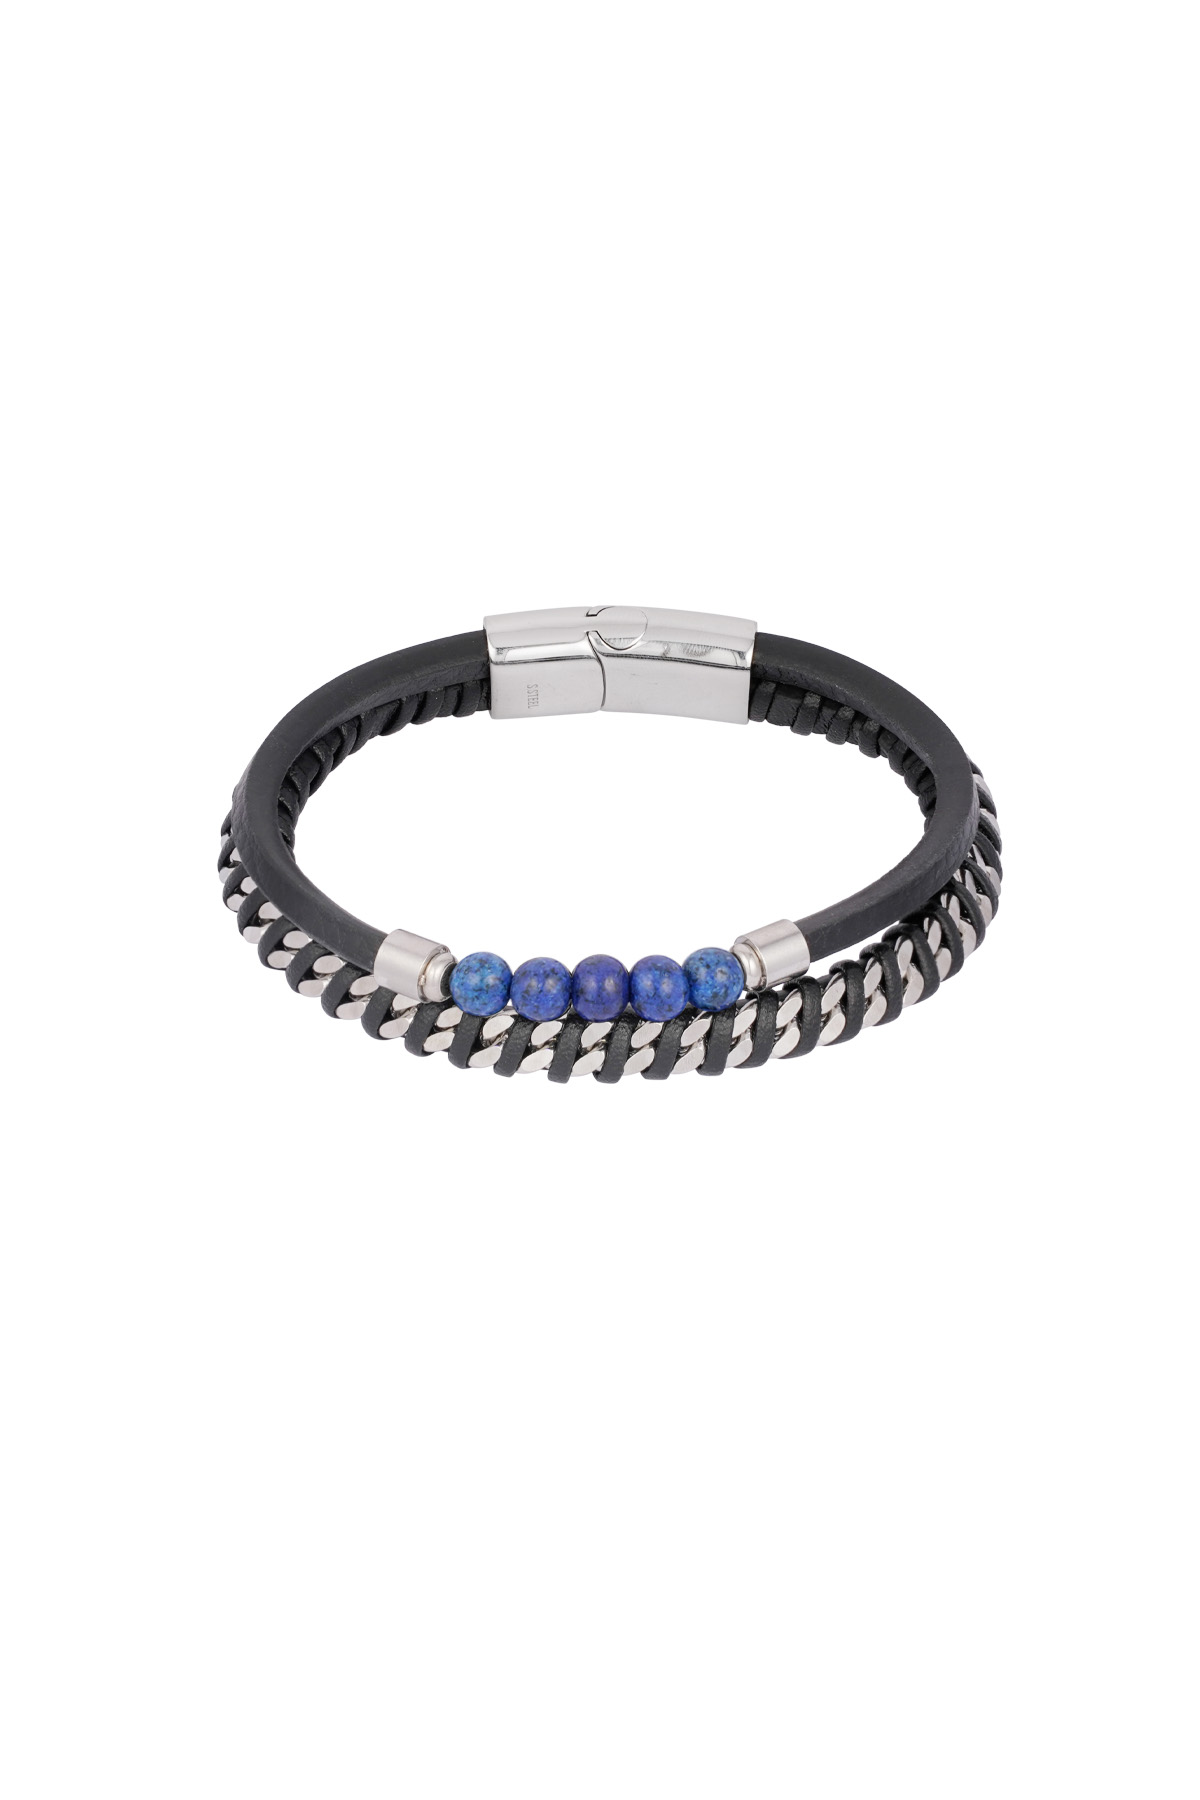 Bracelet homme sérénité - noir bleu h5 